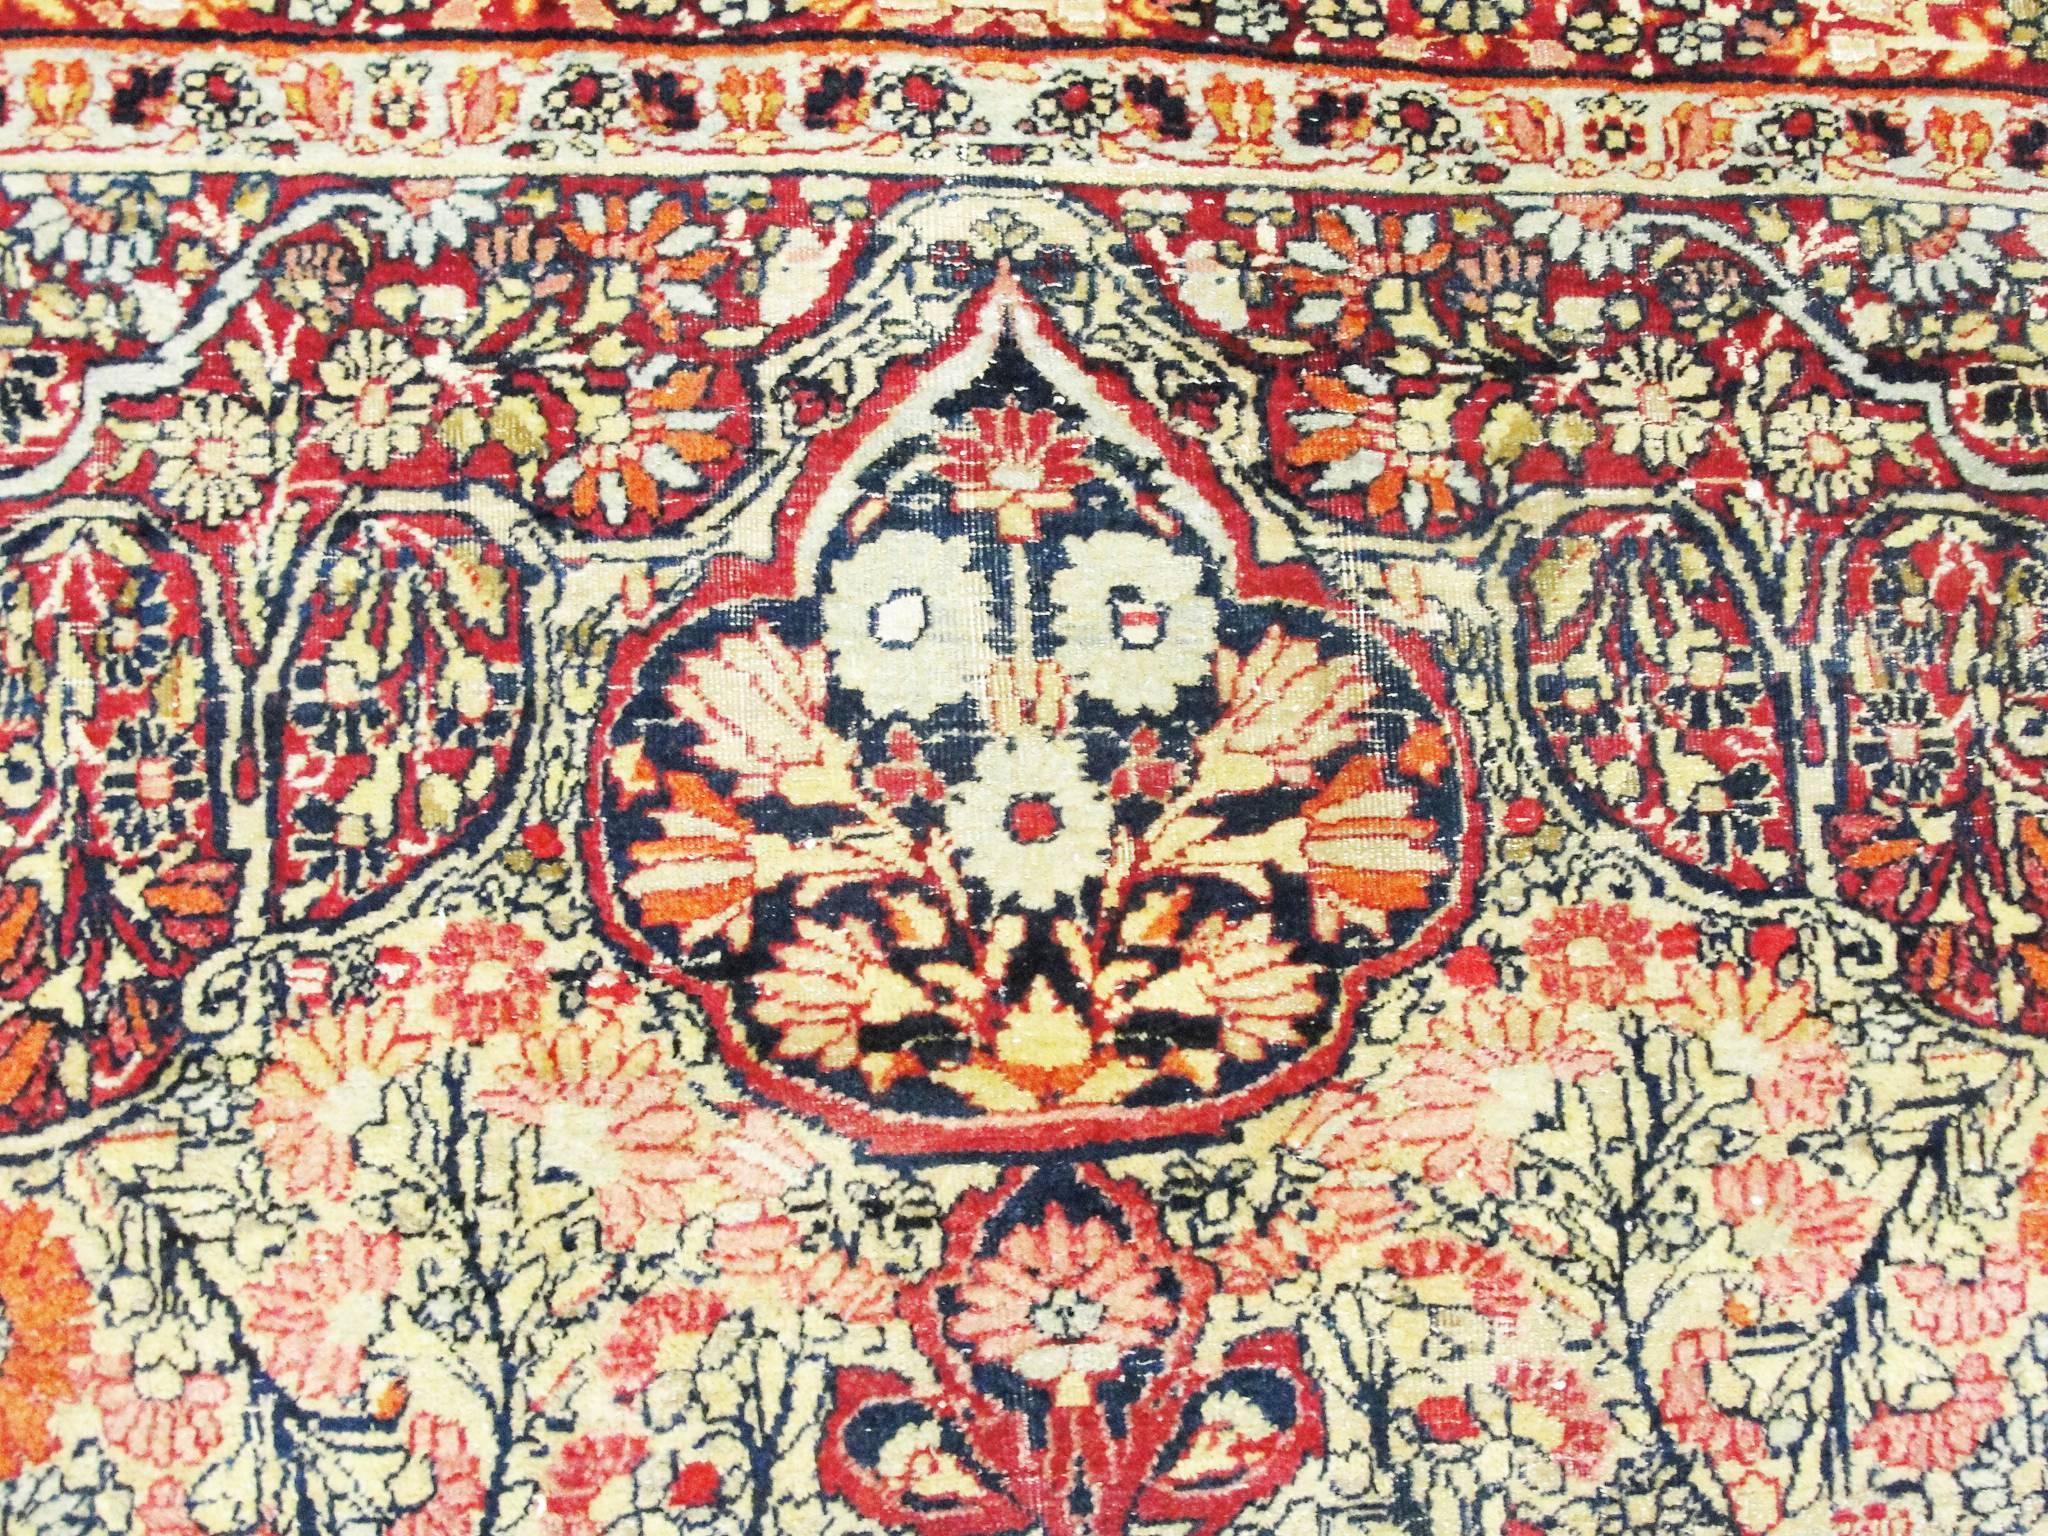  Antique Persian Kermanshah Carpet, 6'10